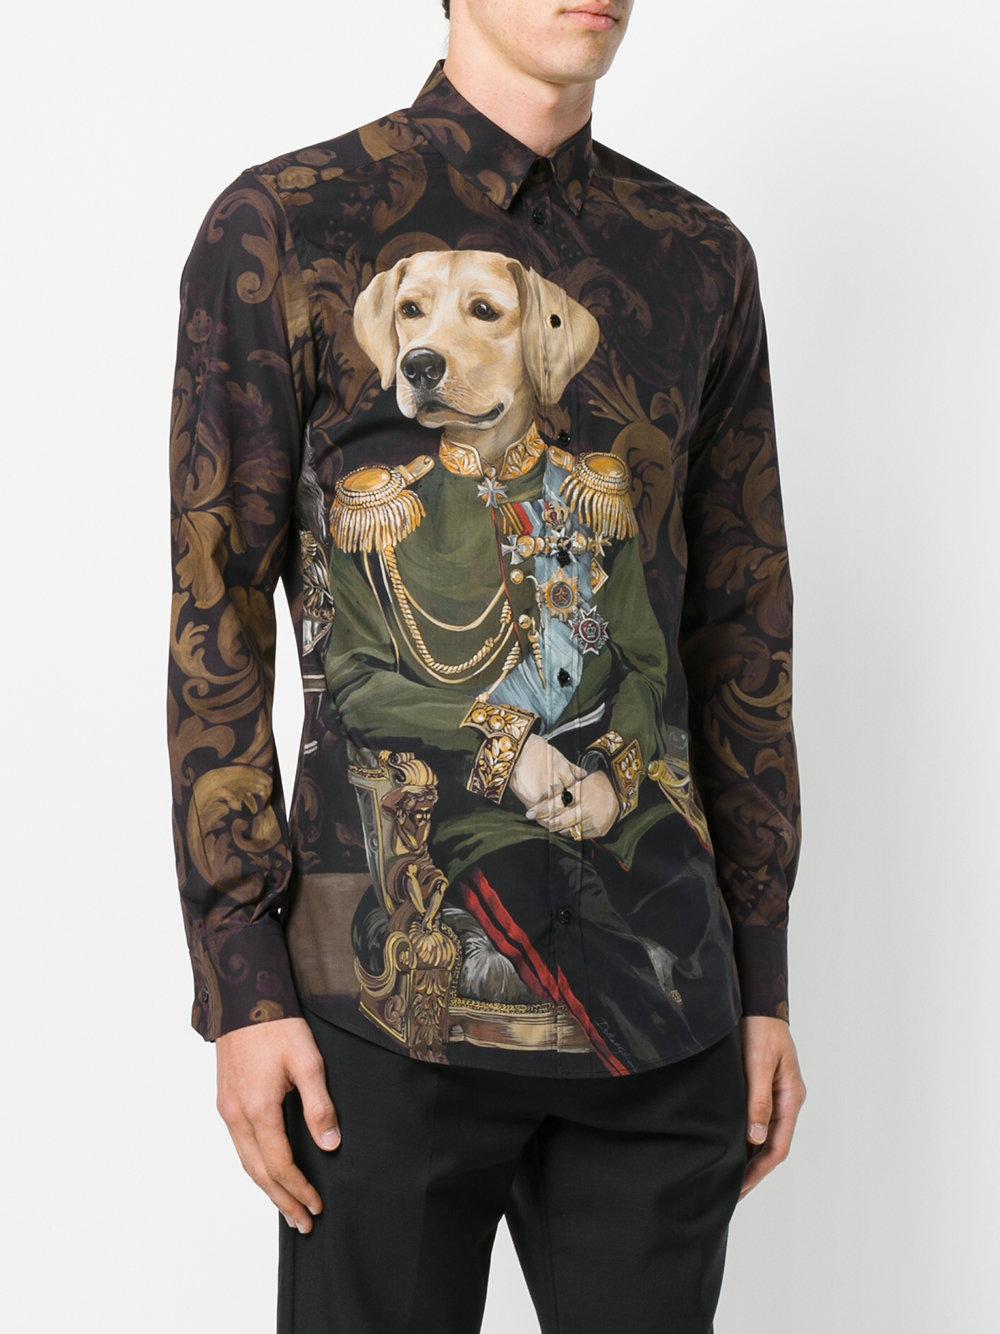 Dolce & Gabbana Cotton Dog Soldier Print Shirt for Men - Lyst